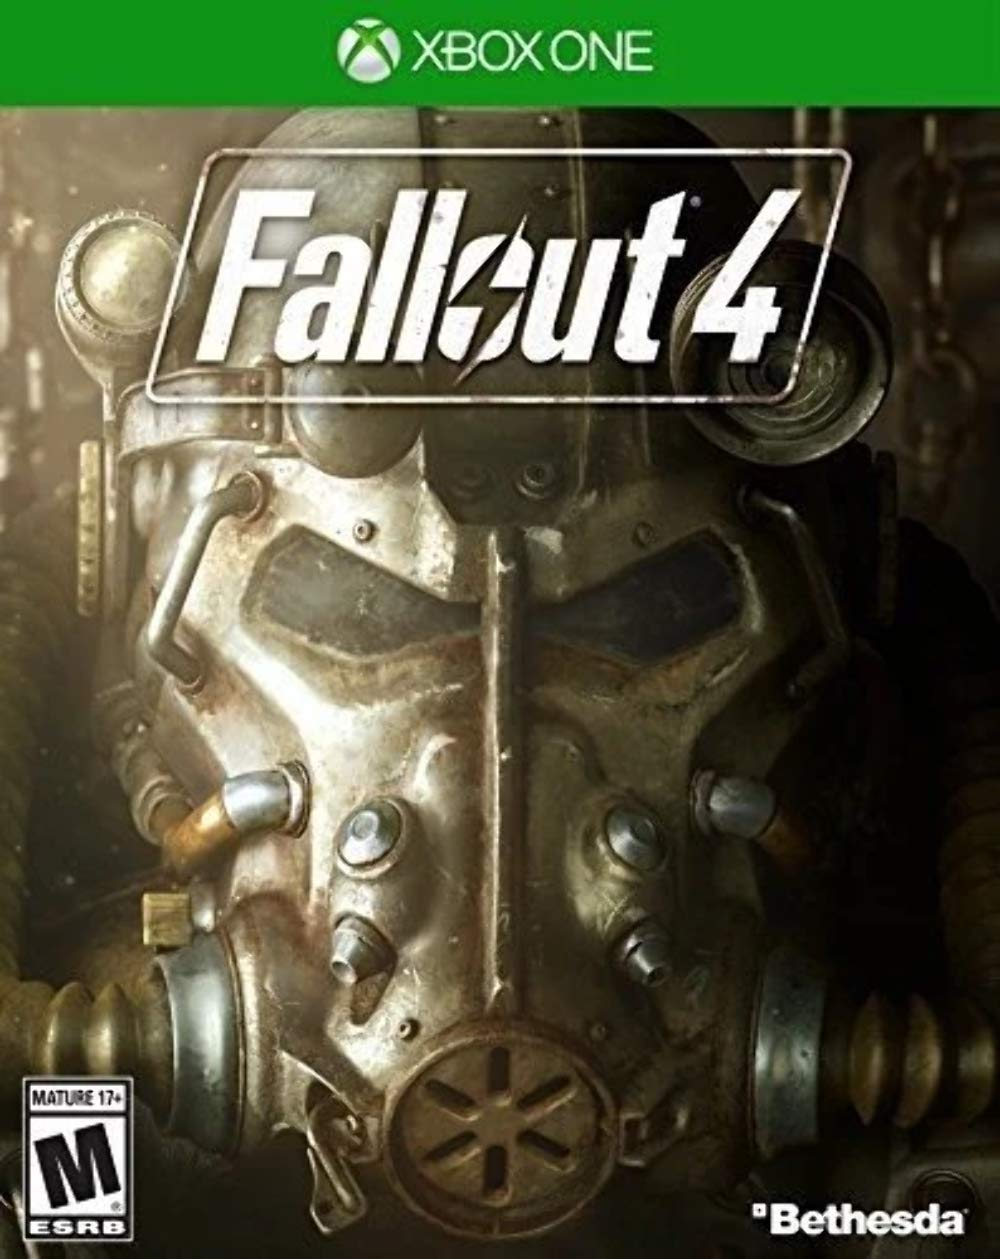 Игра Fallout 4 для Xbox One/Series X|S, Русский язык, электронный ключ Аргентина